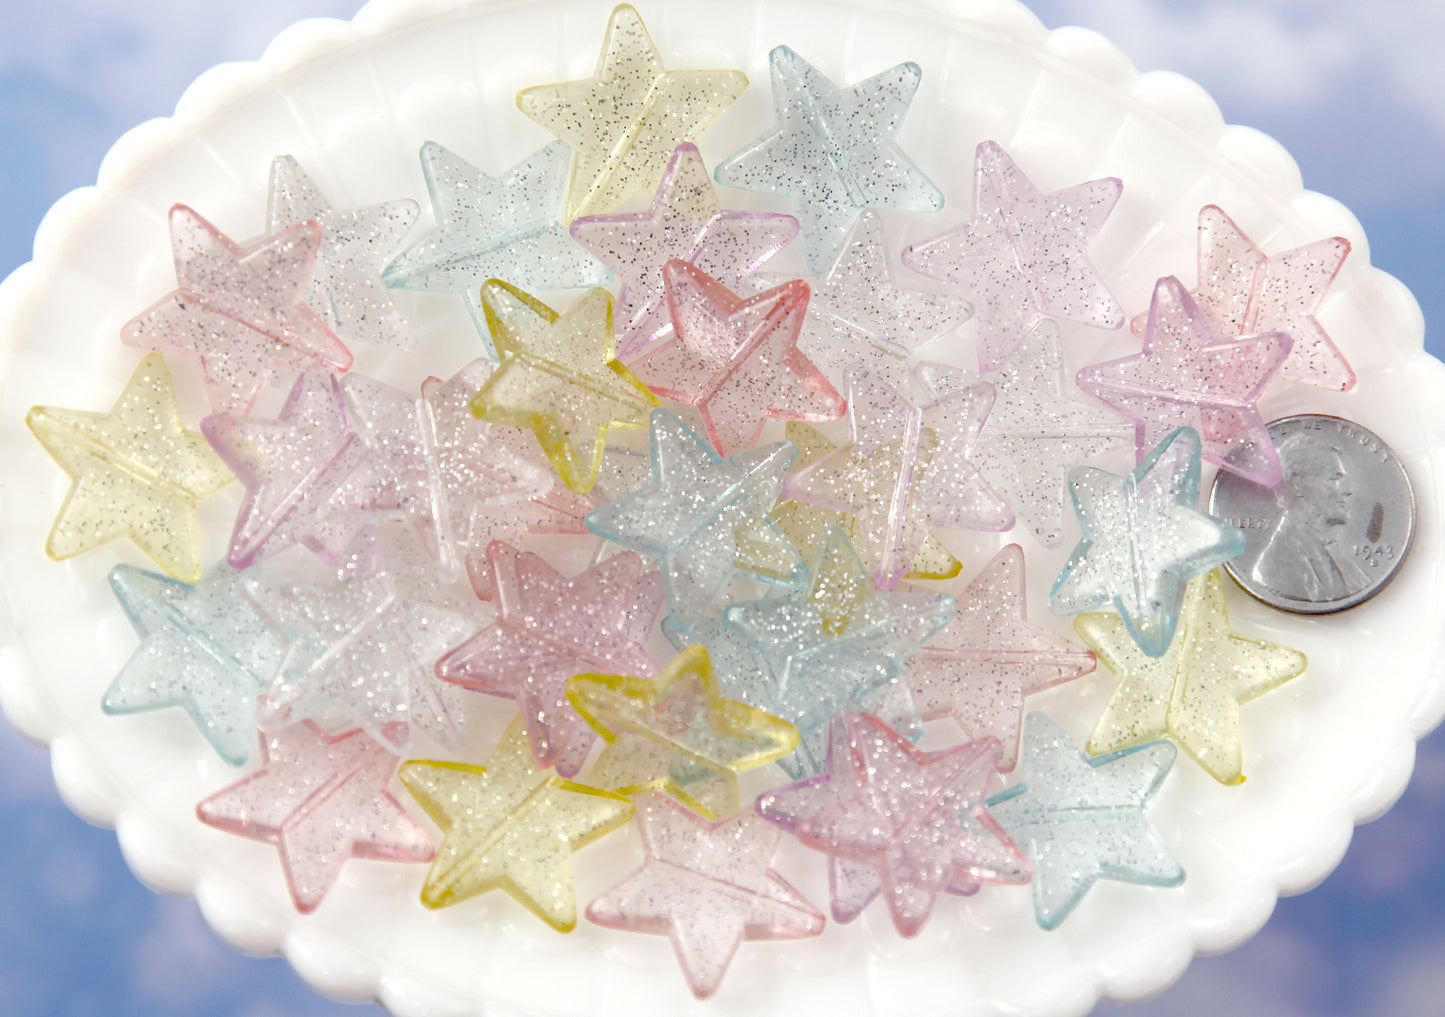 Glitter Star Beads - 22mm Pretty Pastel Glitter Plastic Star Beads - 30 pc set